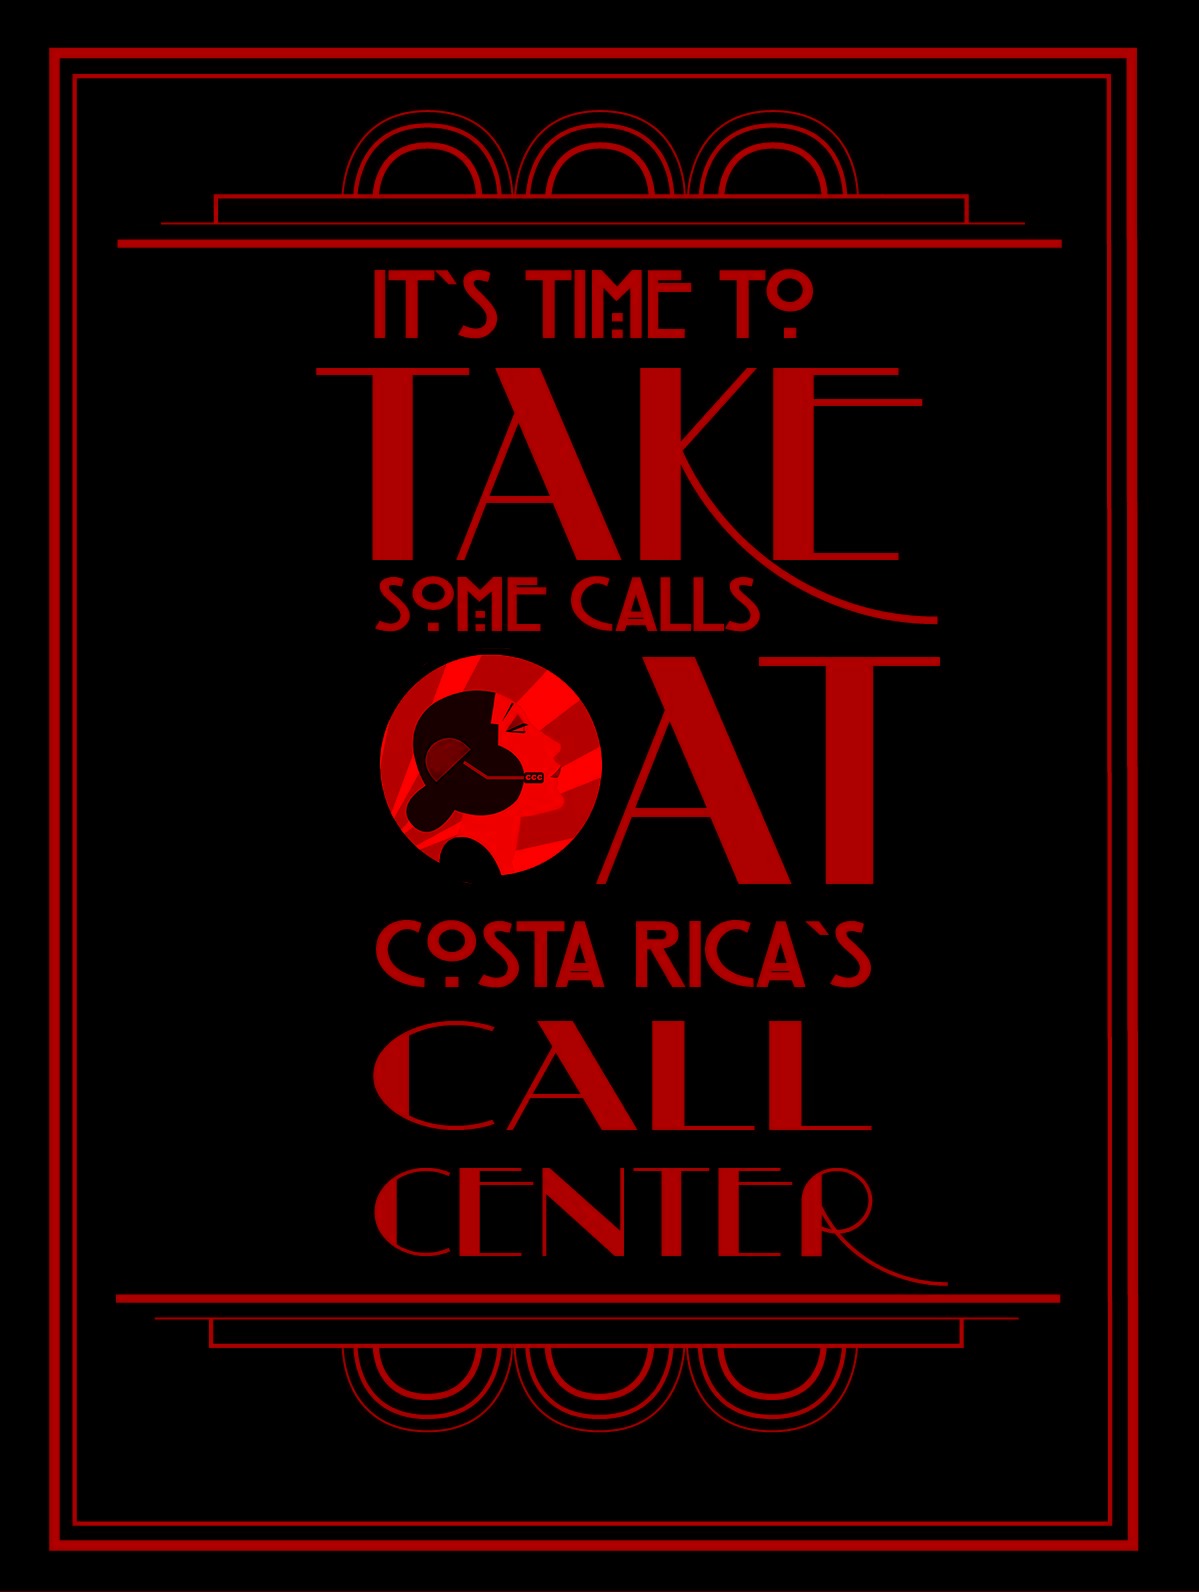 COLD CALL CERTIFICATION COSTA RICA.jpg  by richardblank